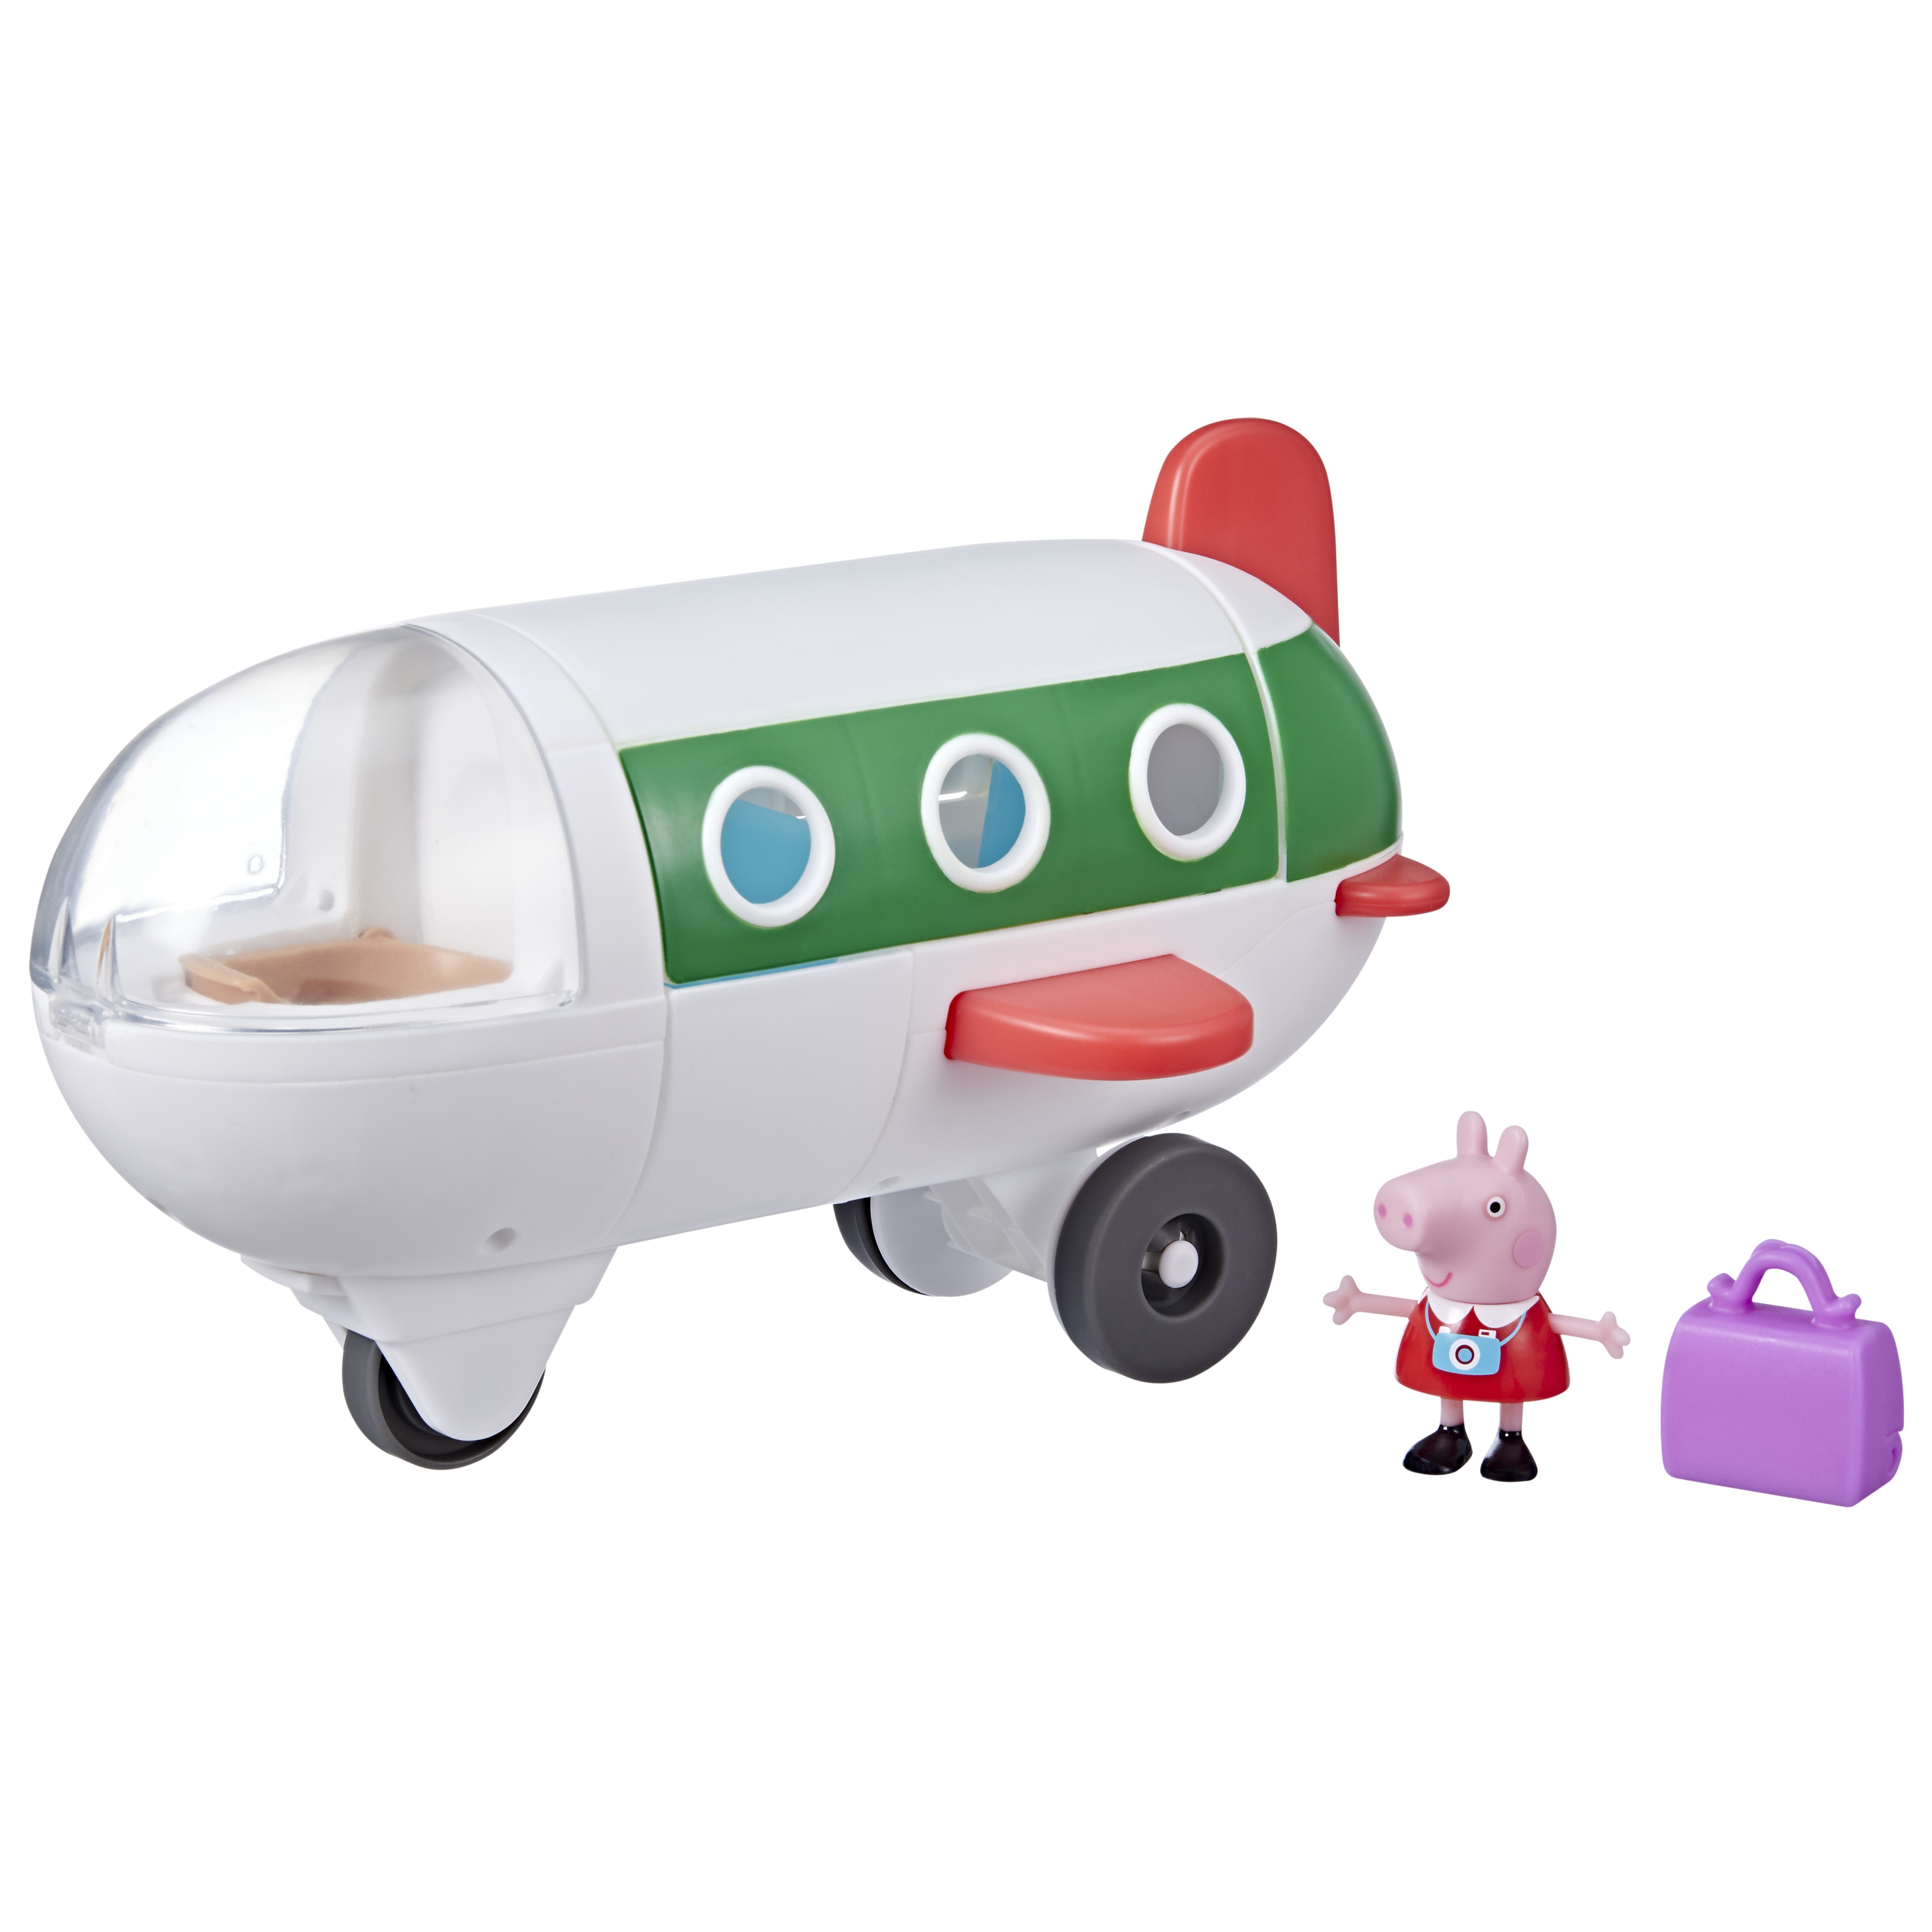 Peppa pig - peppa's adventures - le train de mlle rabbit - jouet